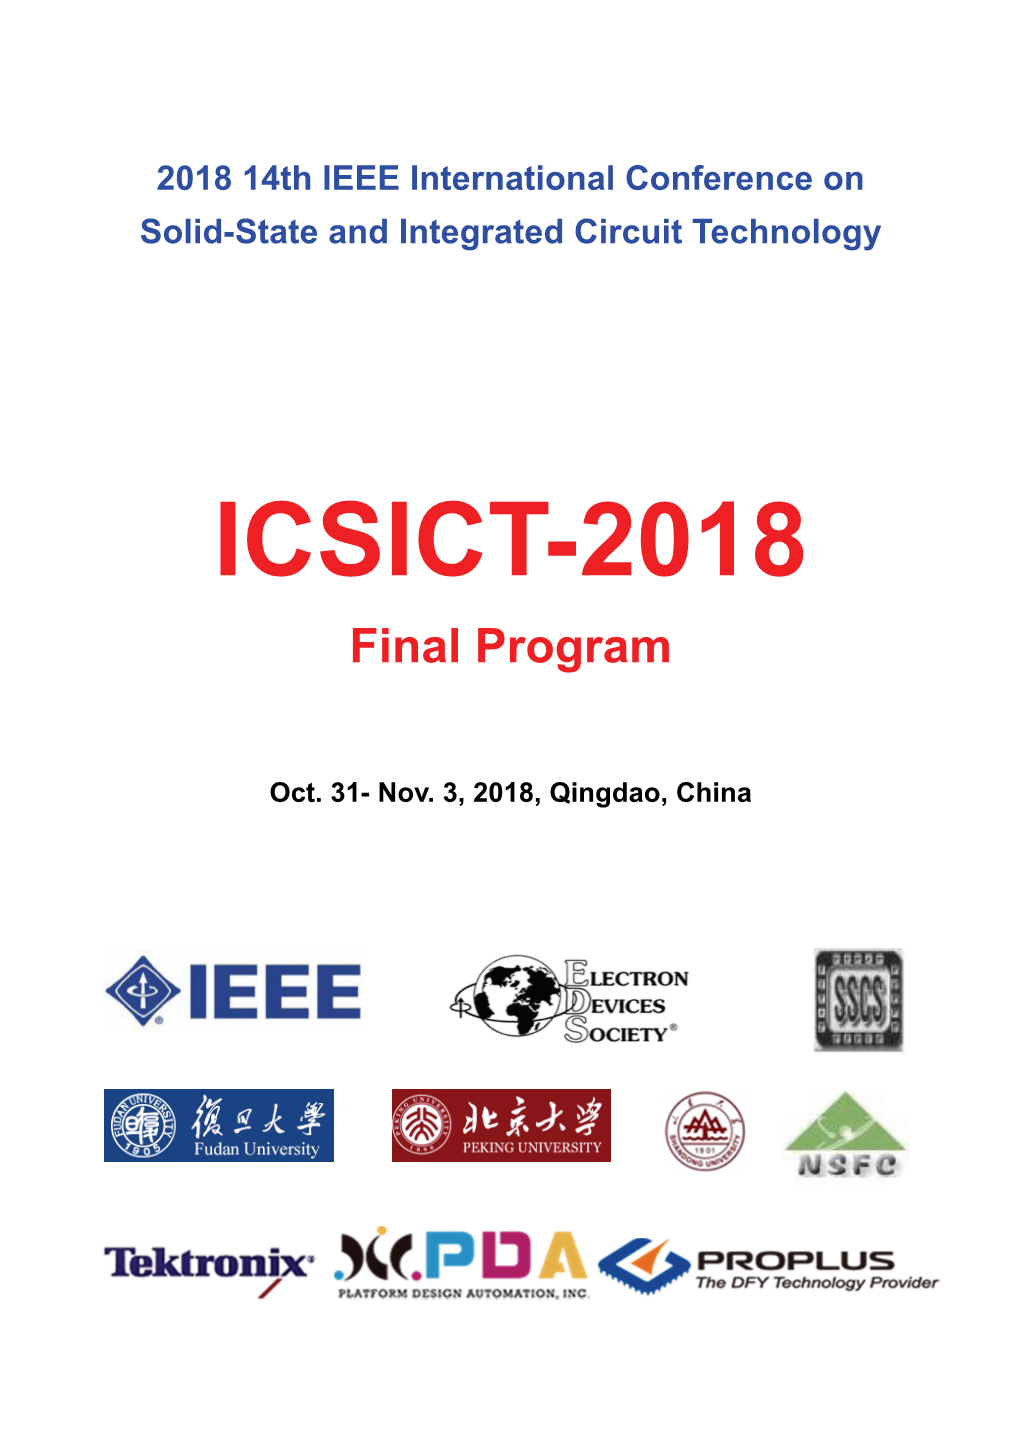 ICSICT-2018 Final Program